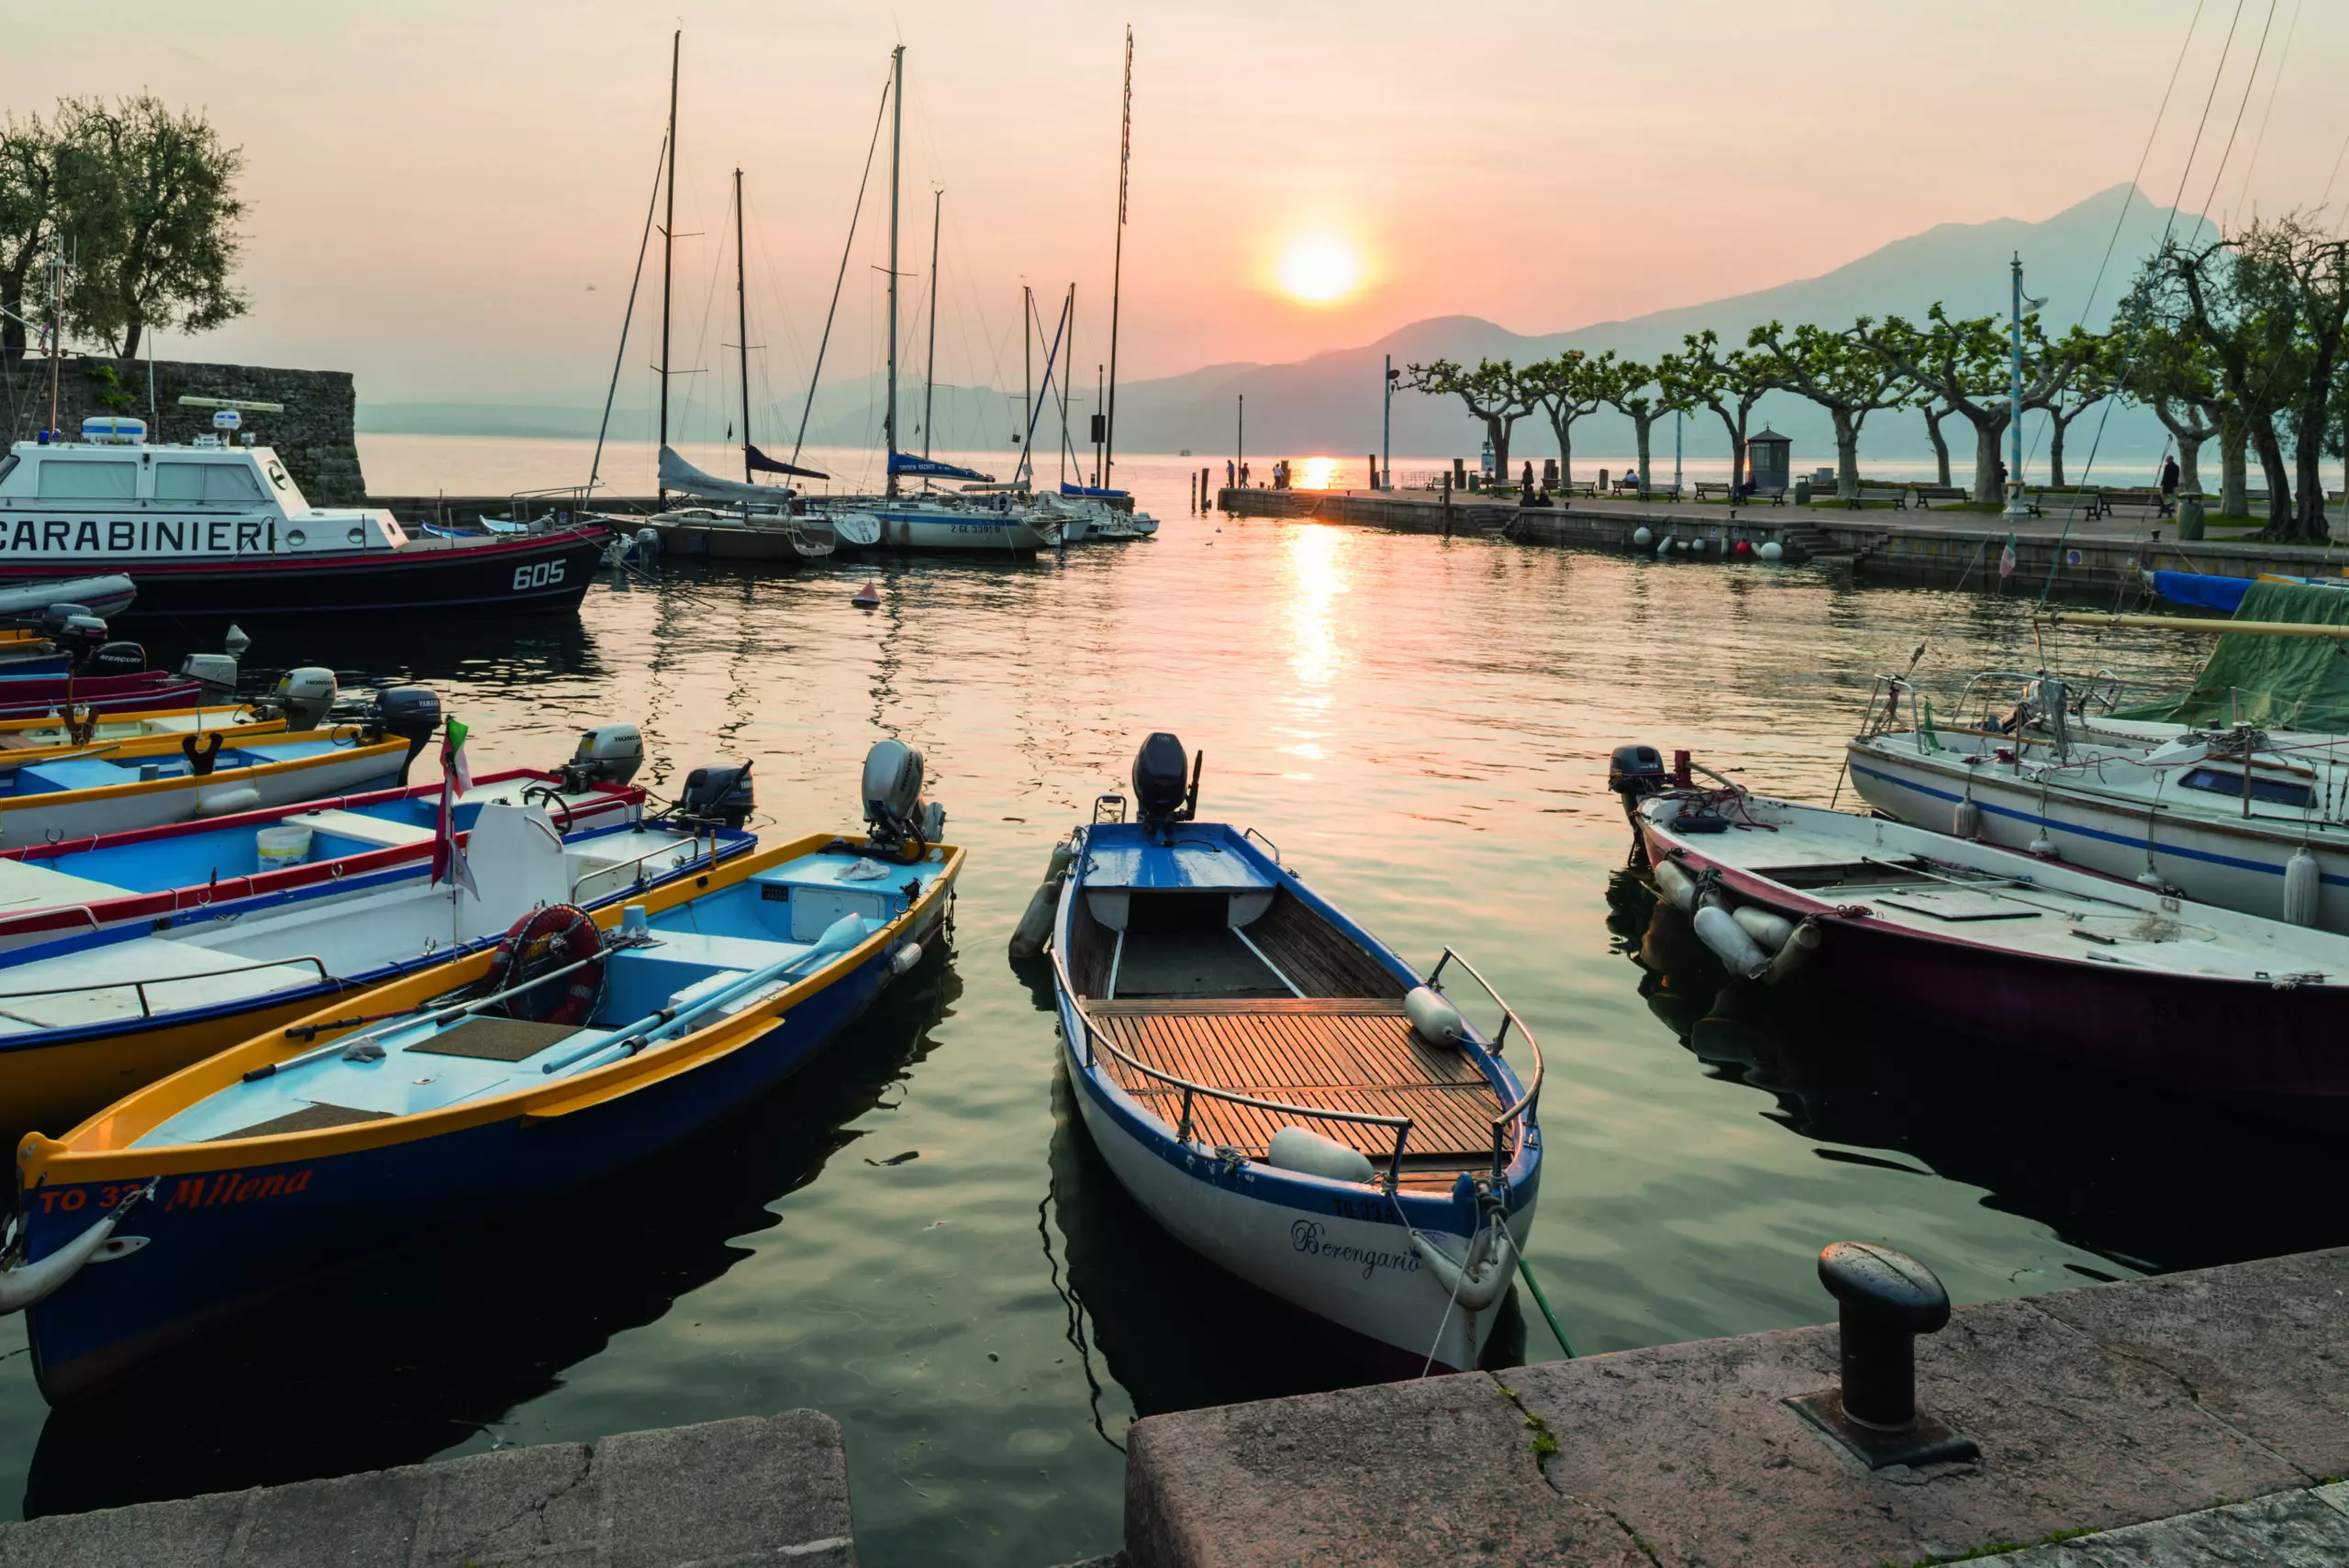 Wandbild (5760) harbour at sunset Torri del Benaco by Franco Cogoli/HUBER IMAGES präsentiert: Tiere,Natur,Landschaften,Sommer,Gewässer